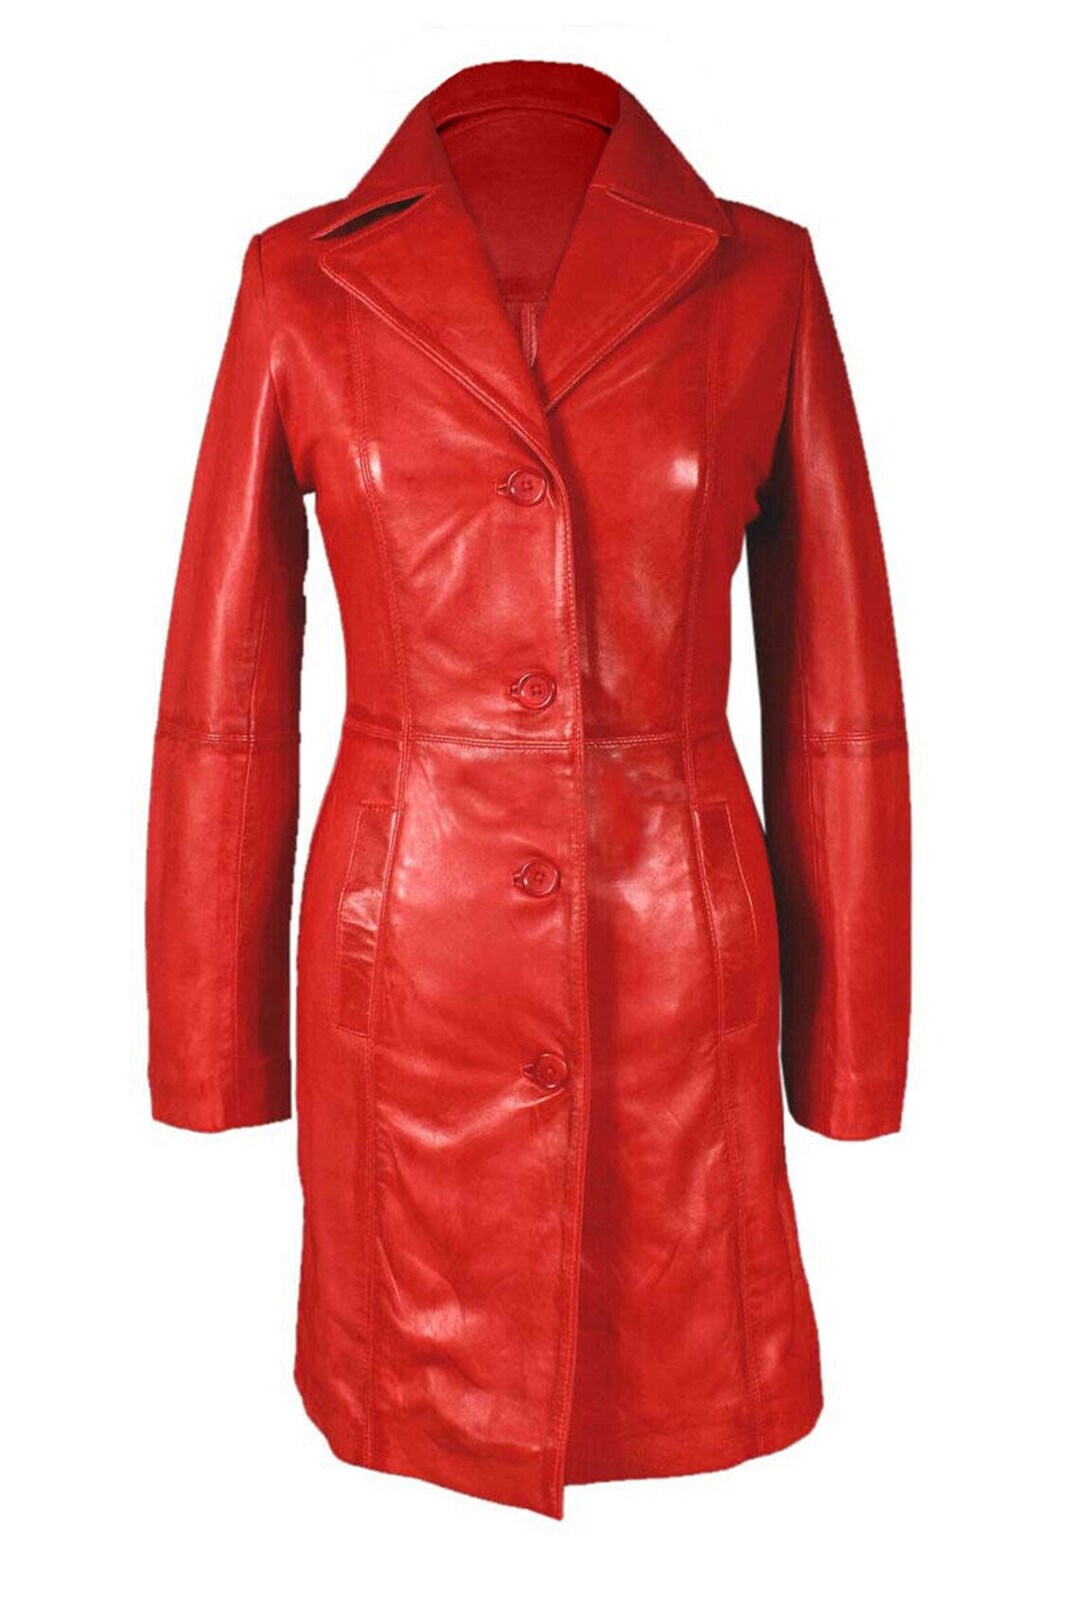 Women Handmade Trench Coat Red Vintage Coat - Etsy